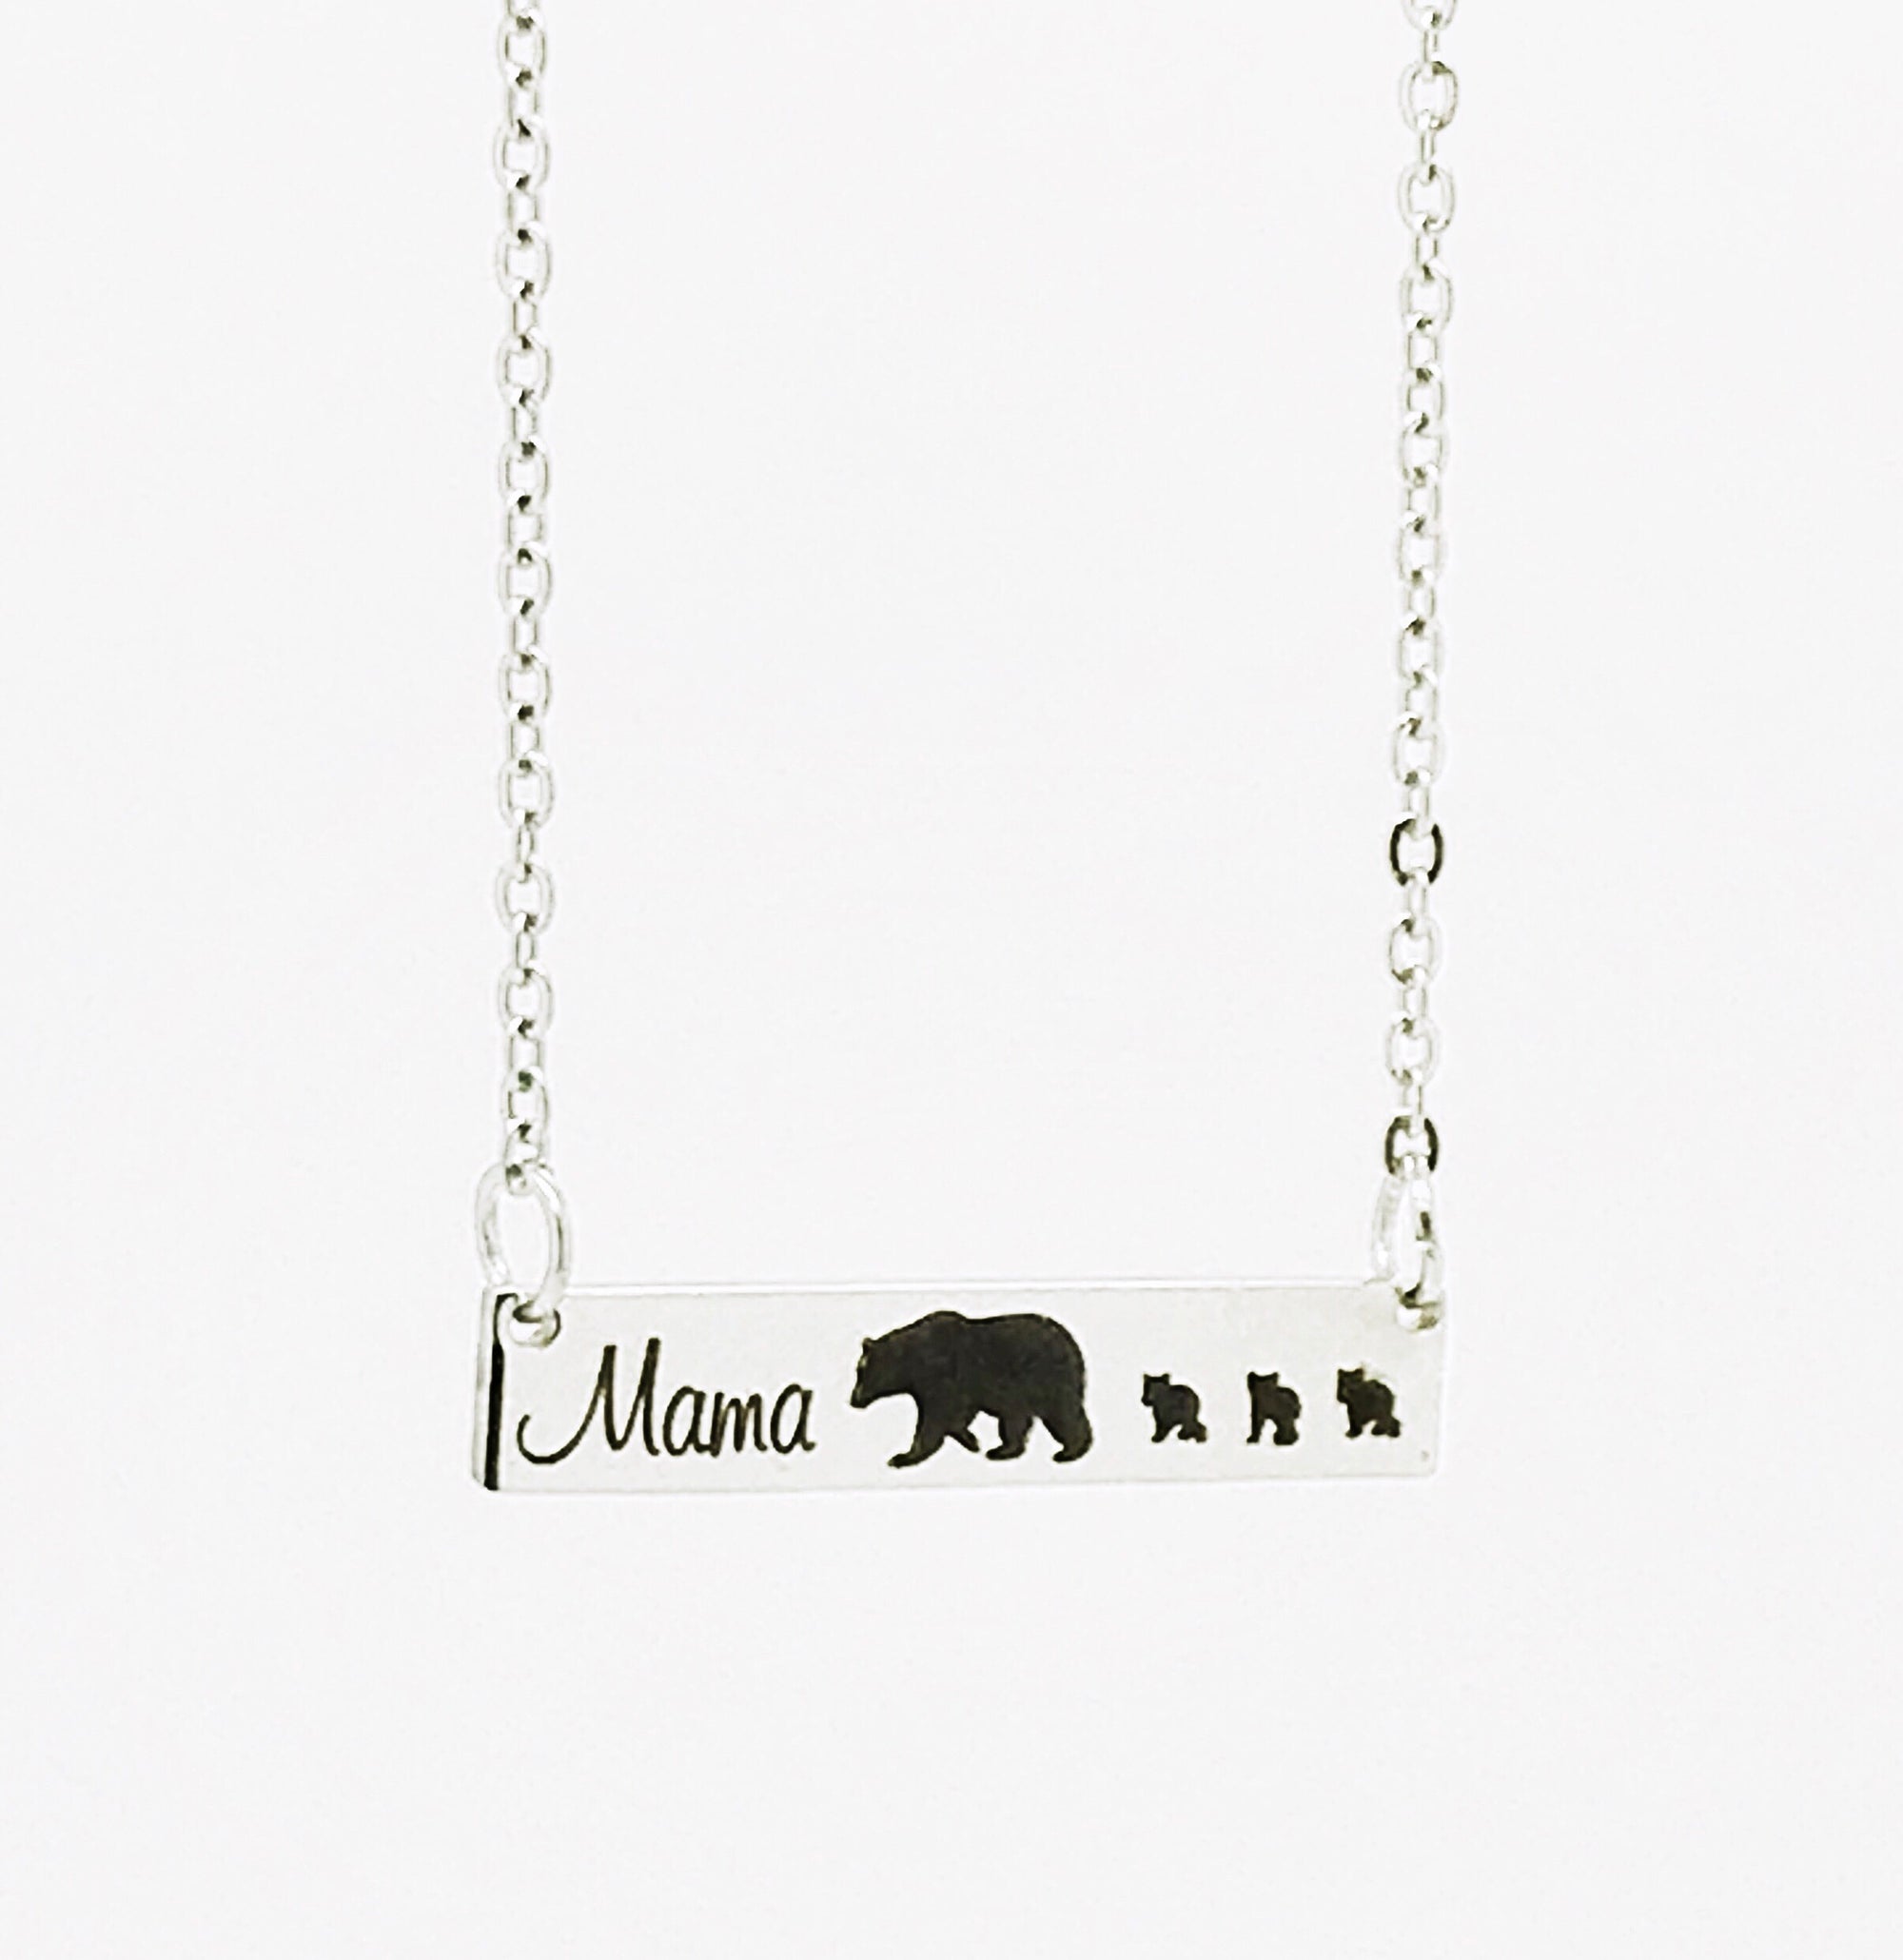 Momma Bear Necklace